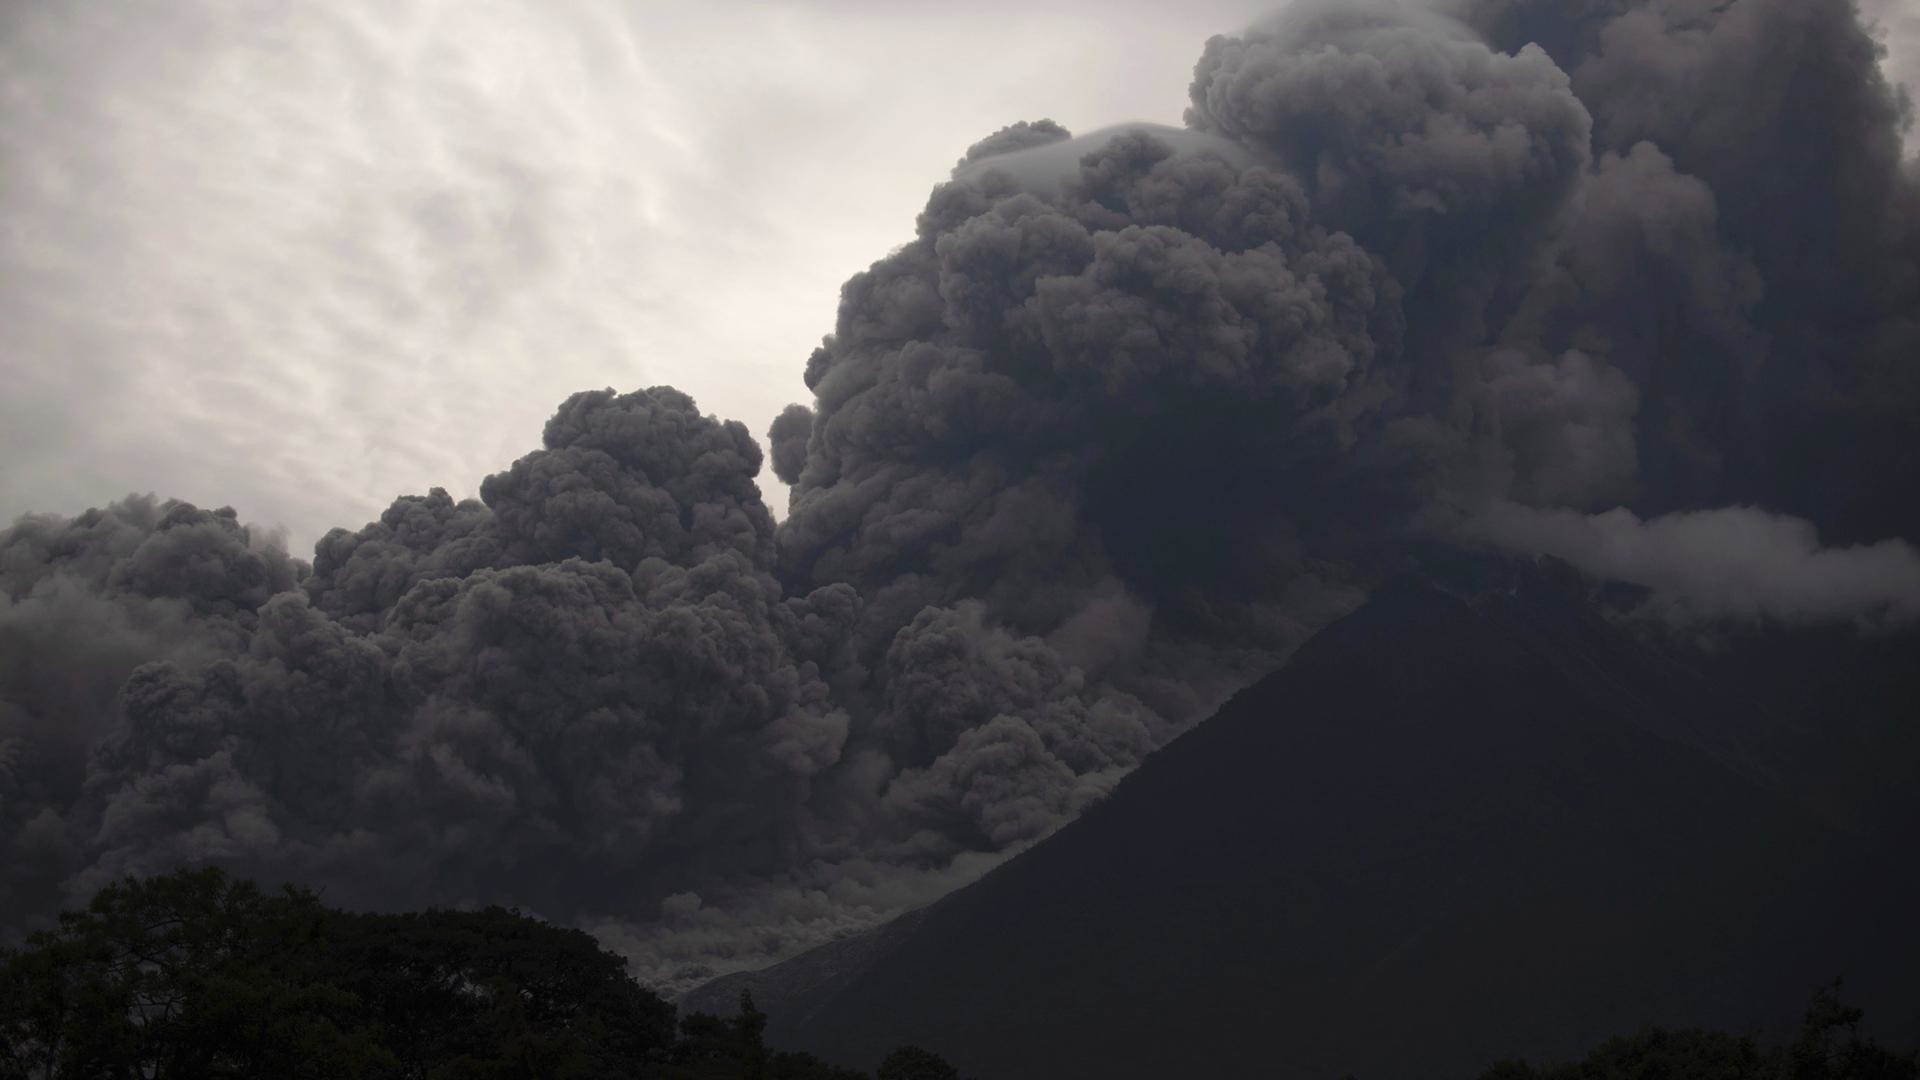 1920x1080 Der Feuervulkan in Guatemala spuckt kilometerweit Asche.